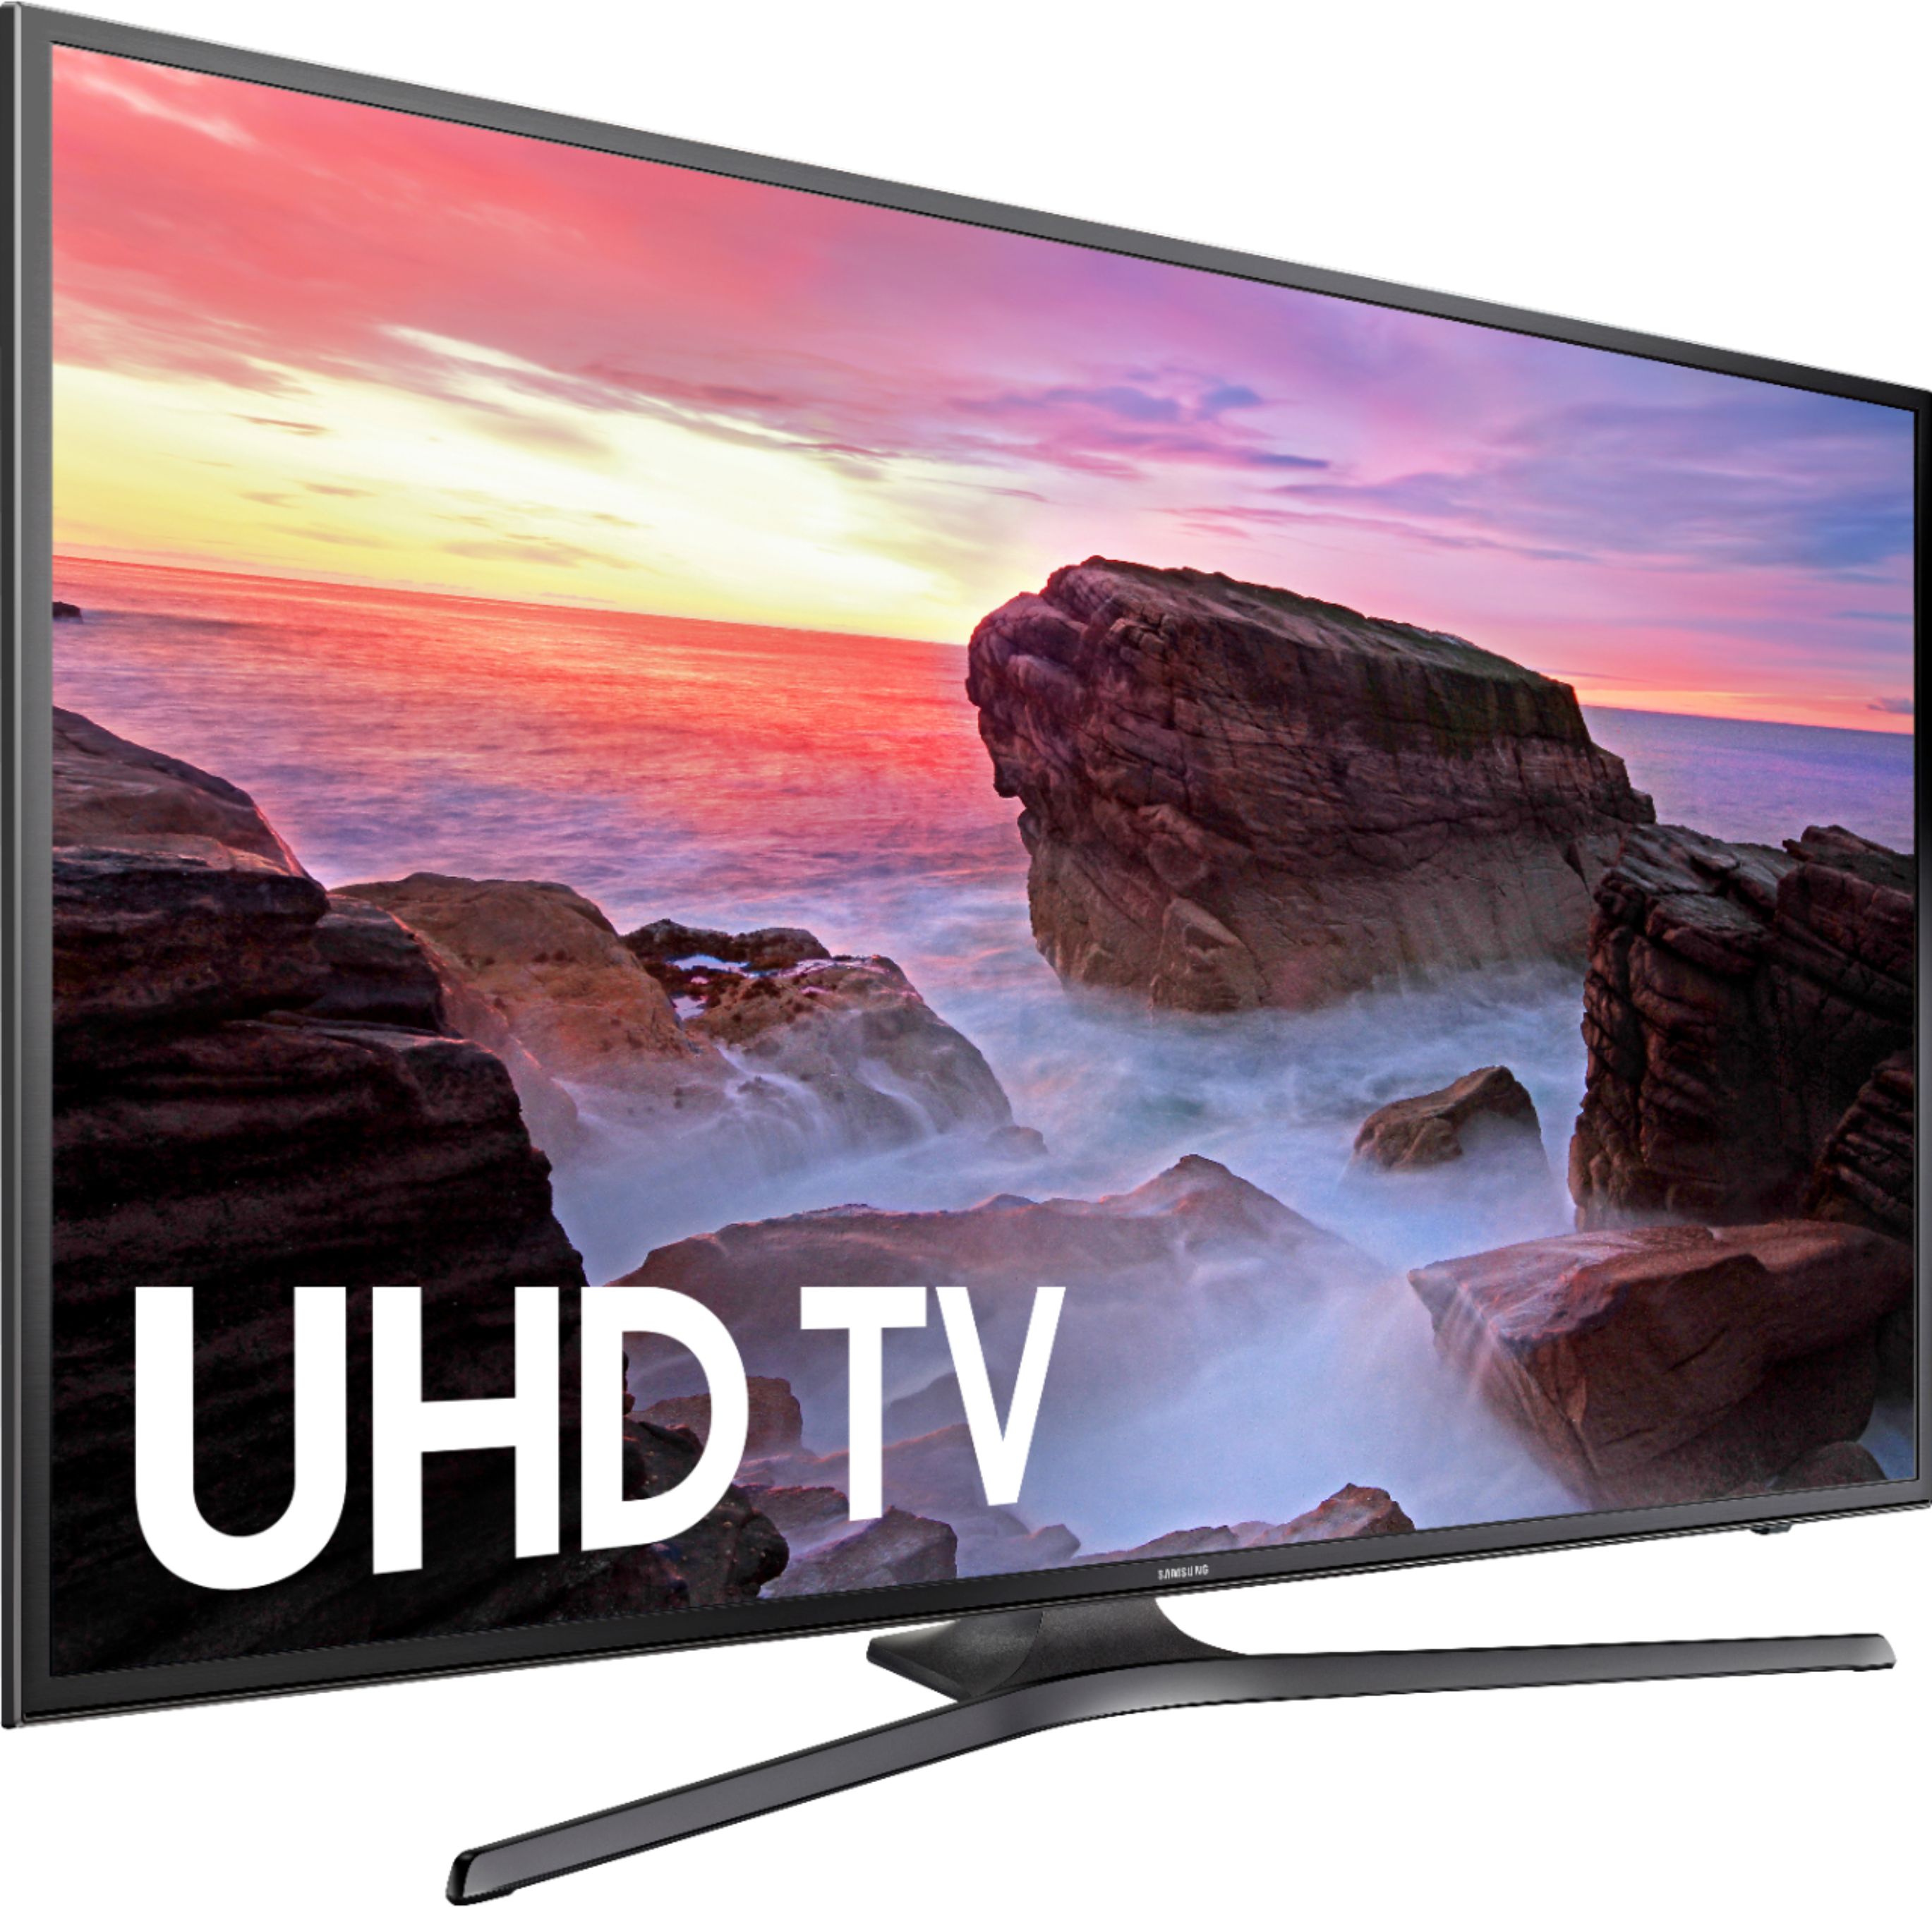 SAMSUNG 50 UHD SMART TV